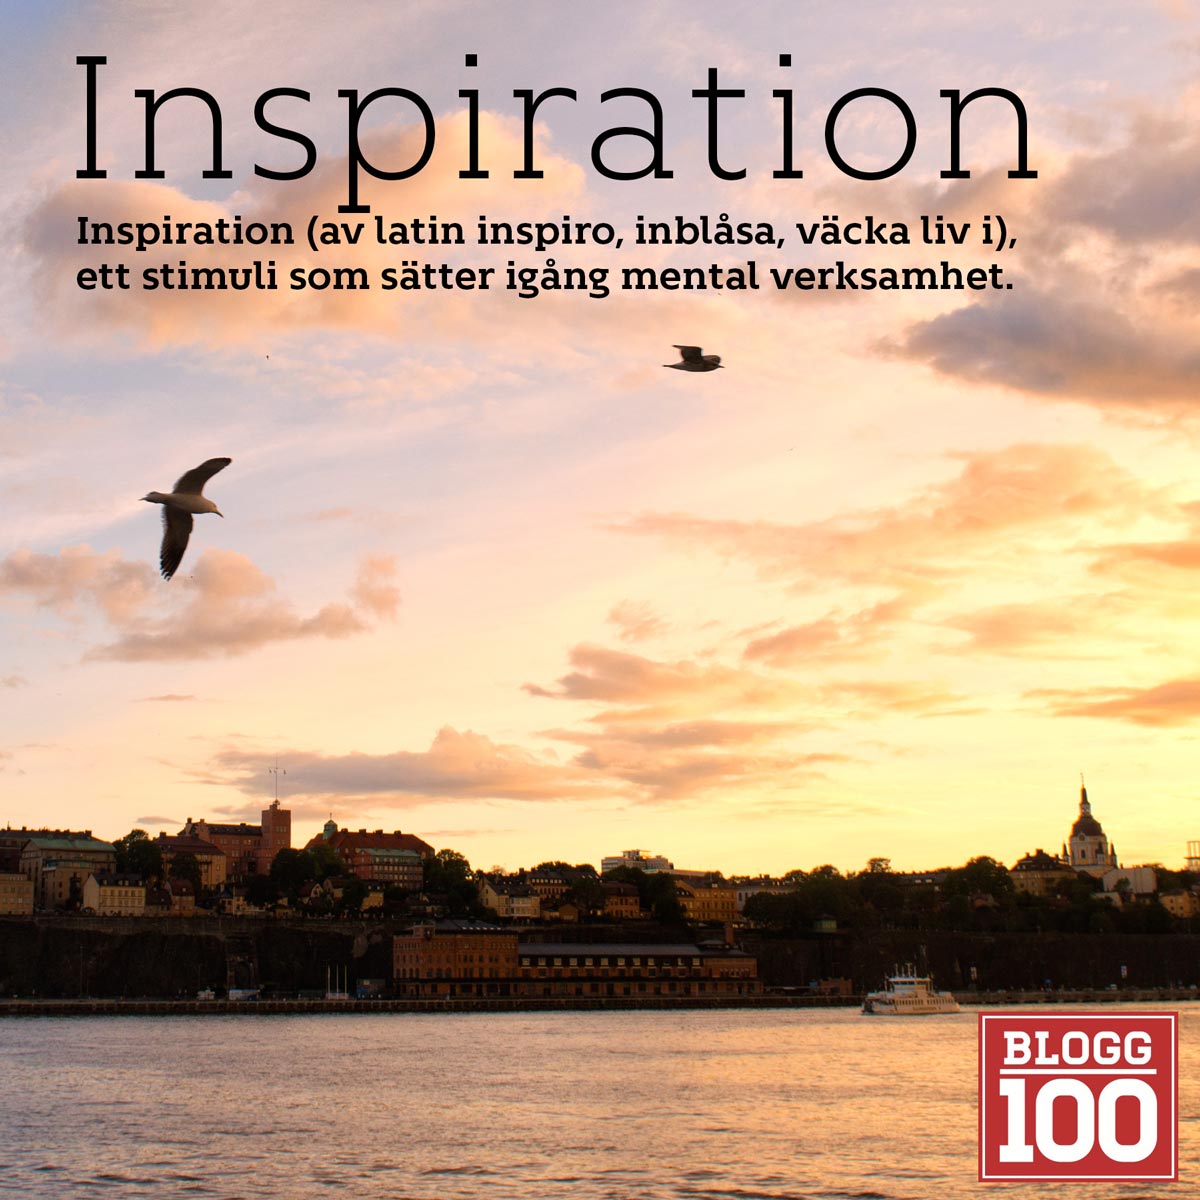 Inspiration blogg100 #blogg100